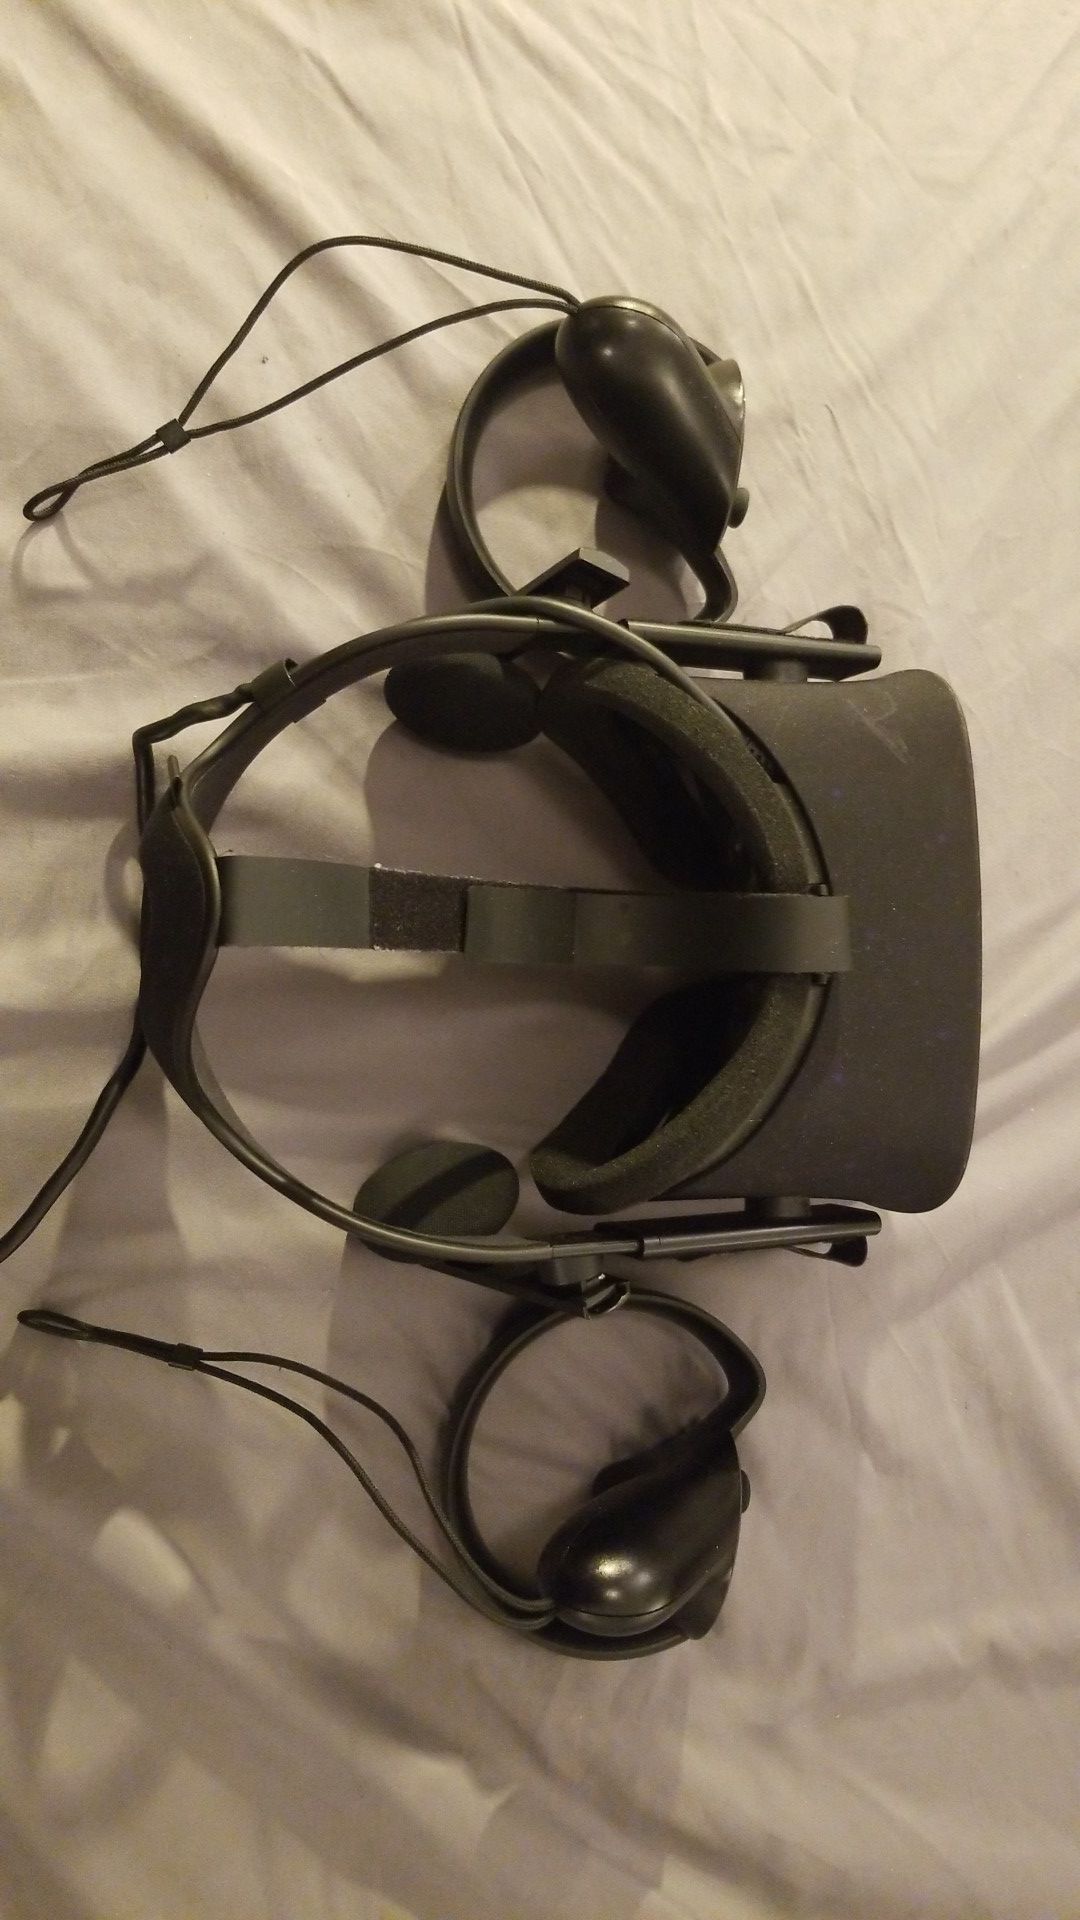 Oculus rift with extra sensor